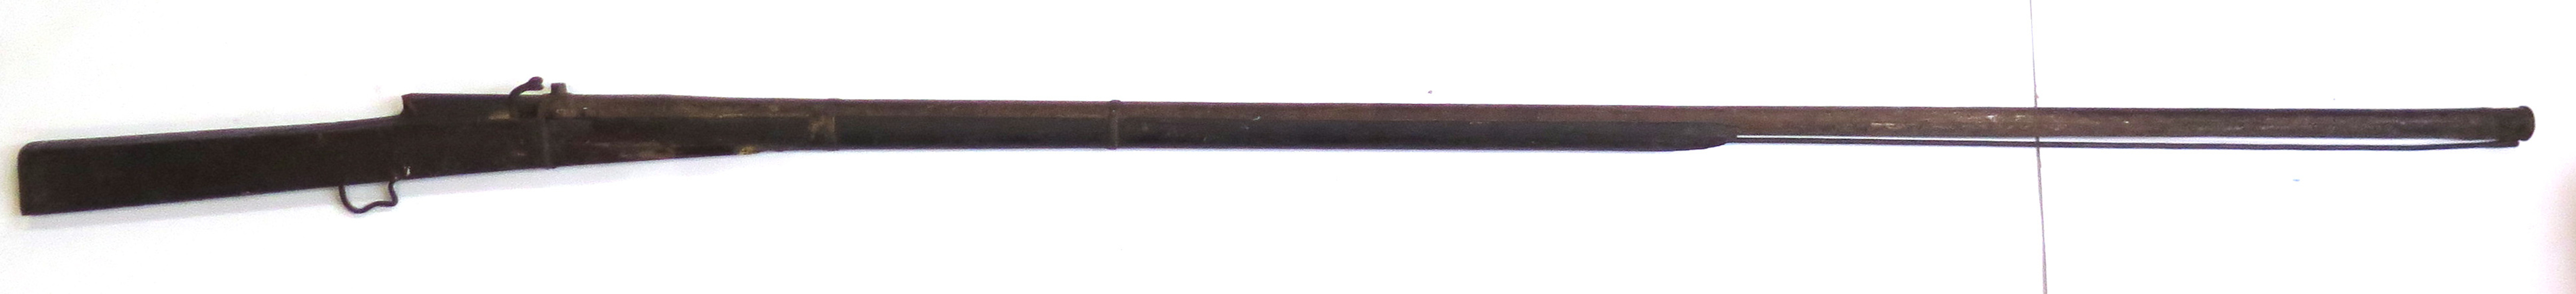 Toradar, smide med trästock, Indien, 18-1900-tal, luntlåsmekanism, _14802a_lg.jpeg